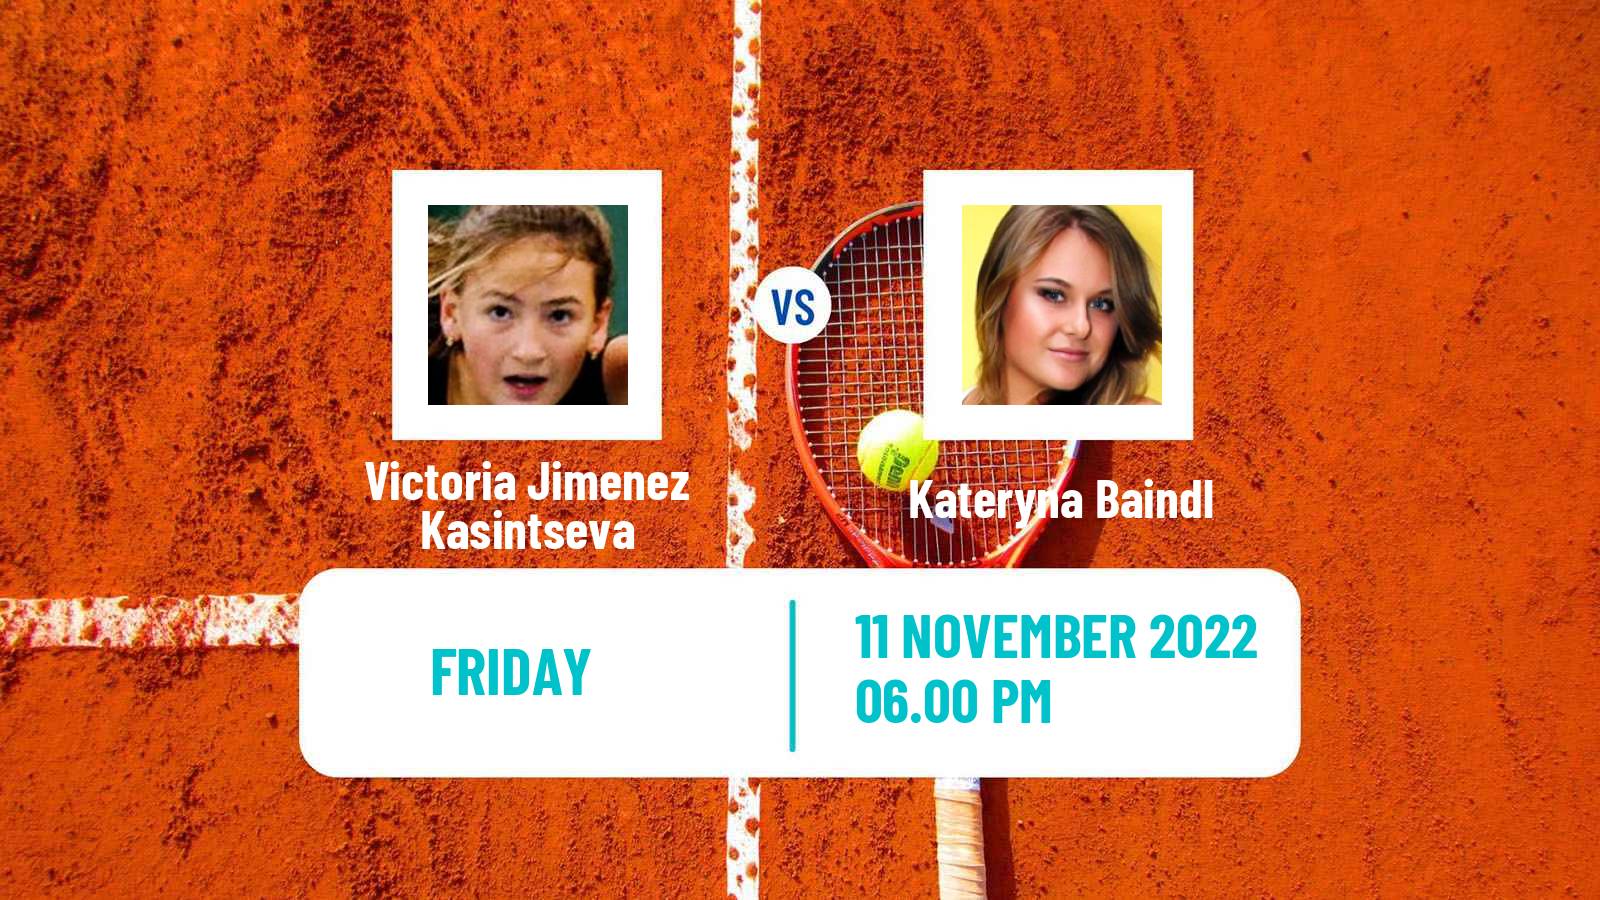 Tennis ATP Challenger Victoria Jimenez Kasintseva - Kateryna Baindl